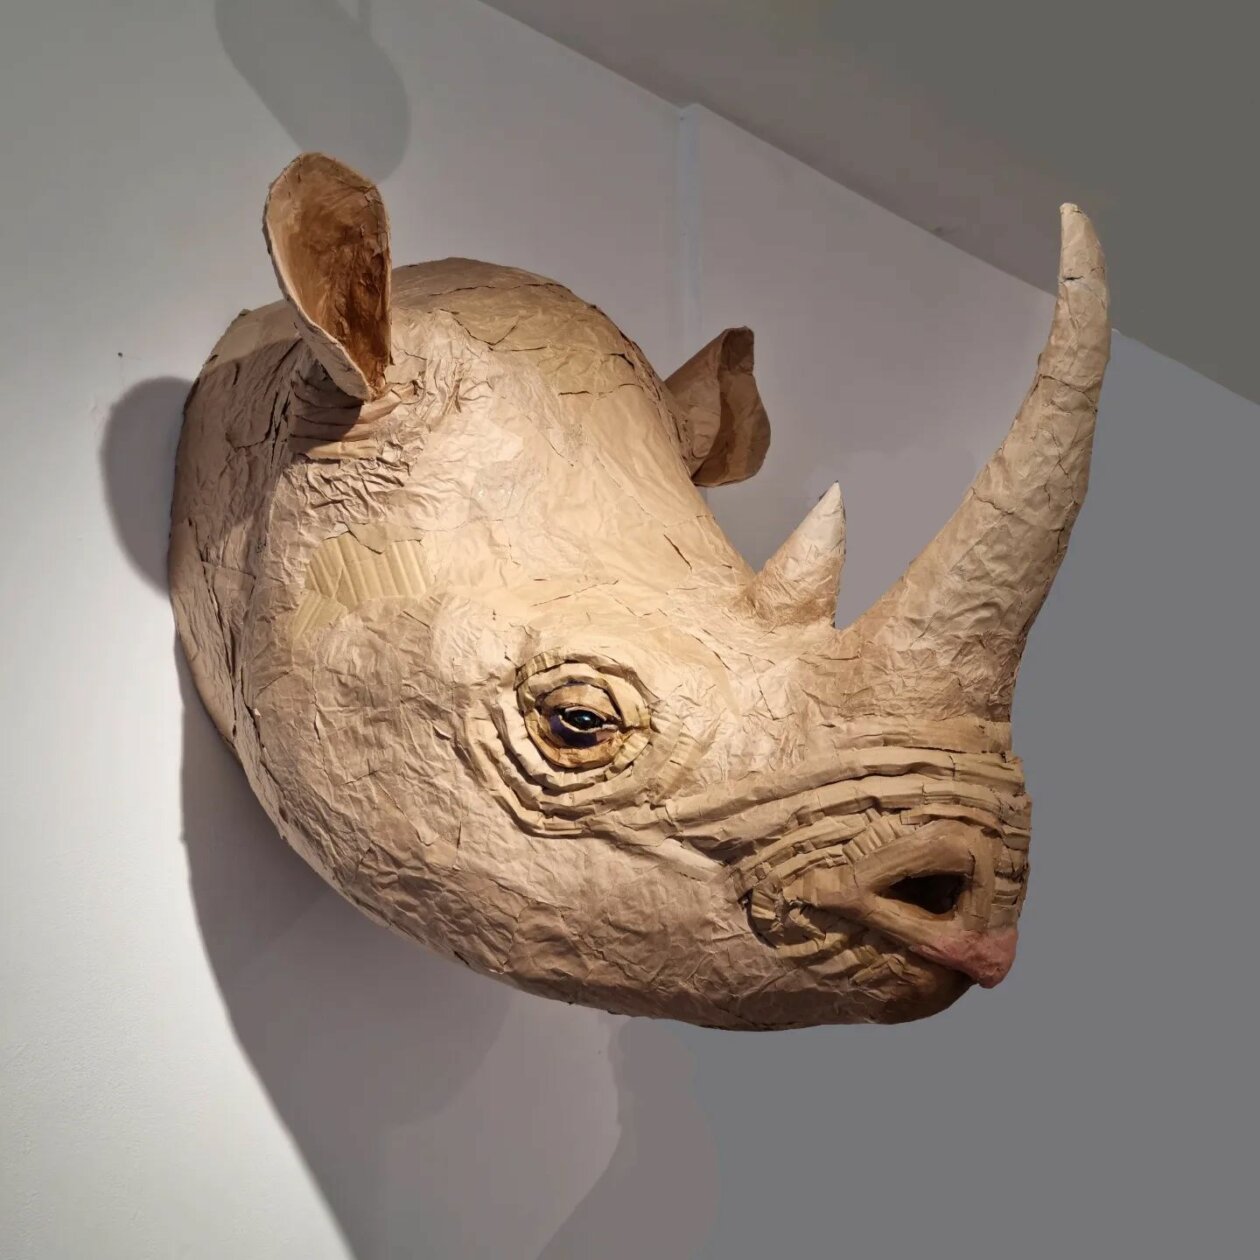 Lifelike Animal Sculptures By Josh Gluckstein (12)